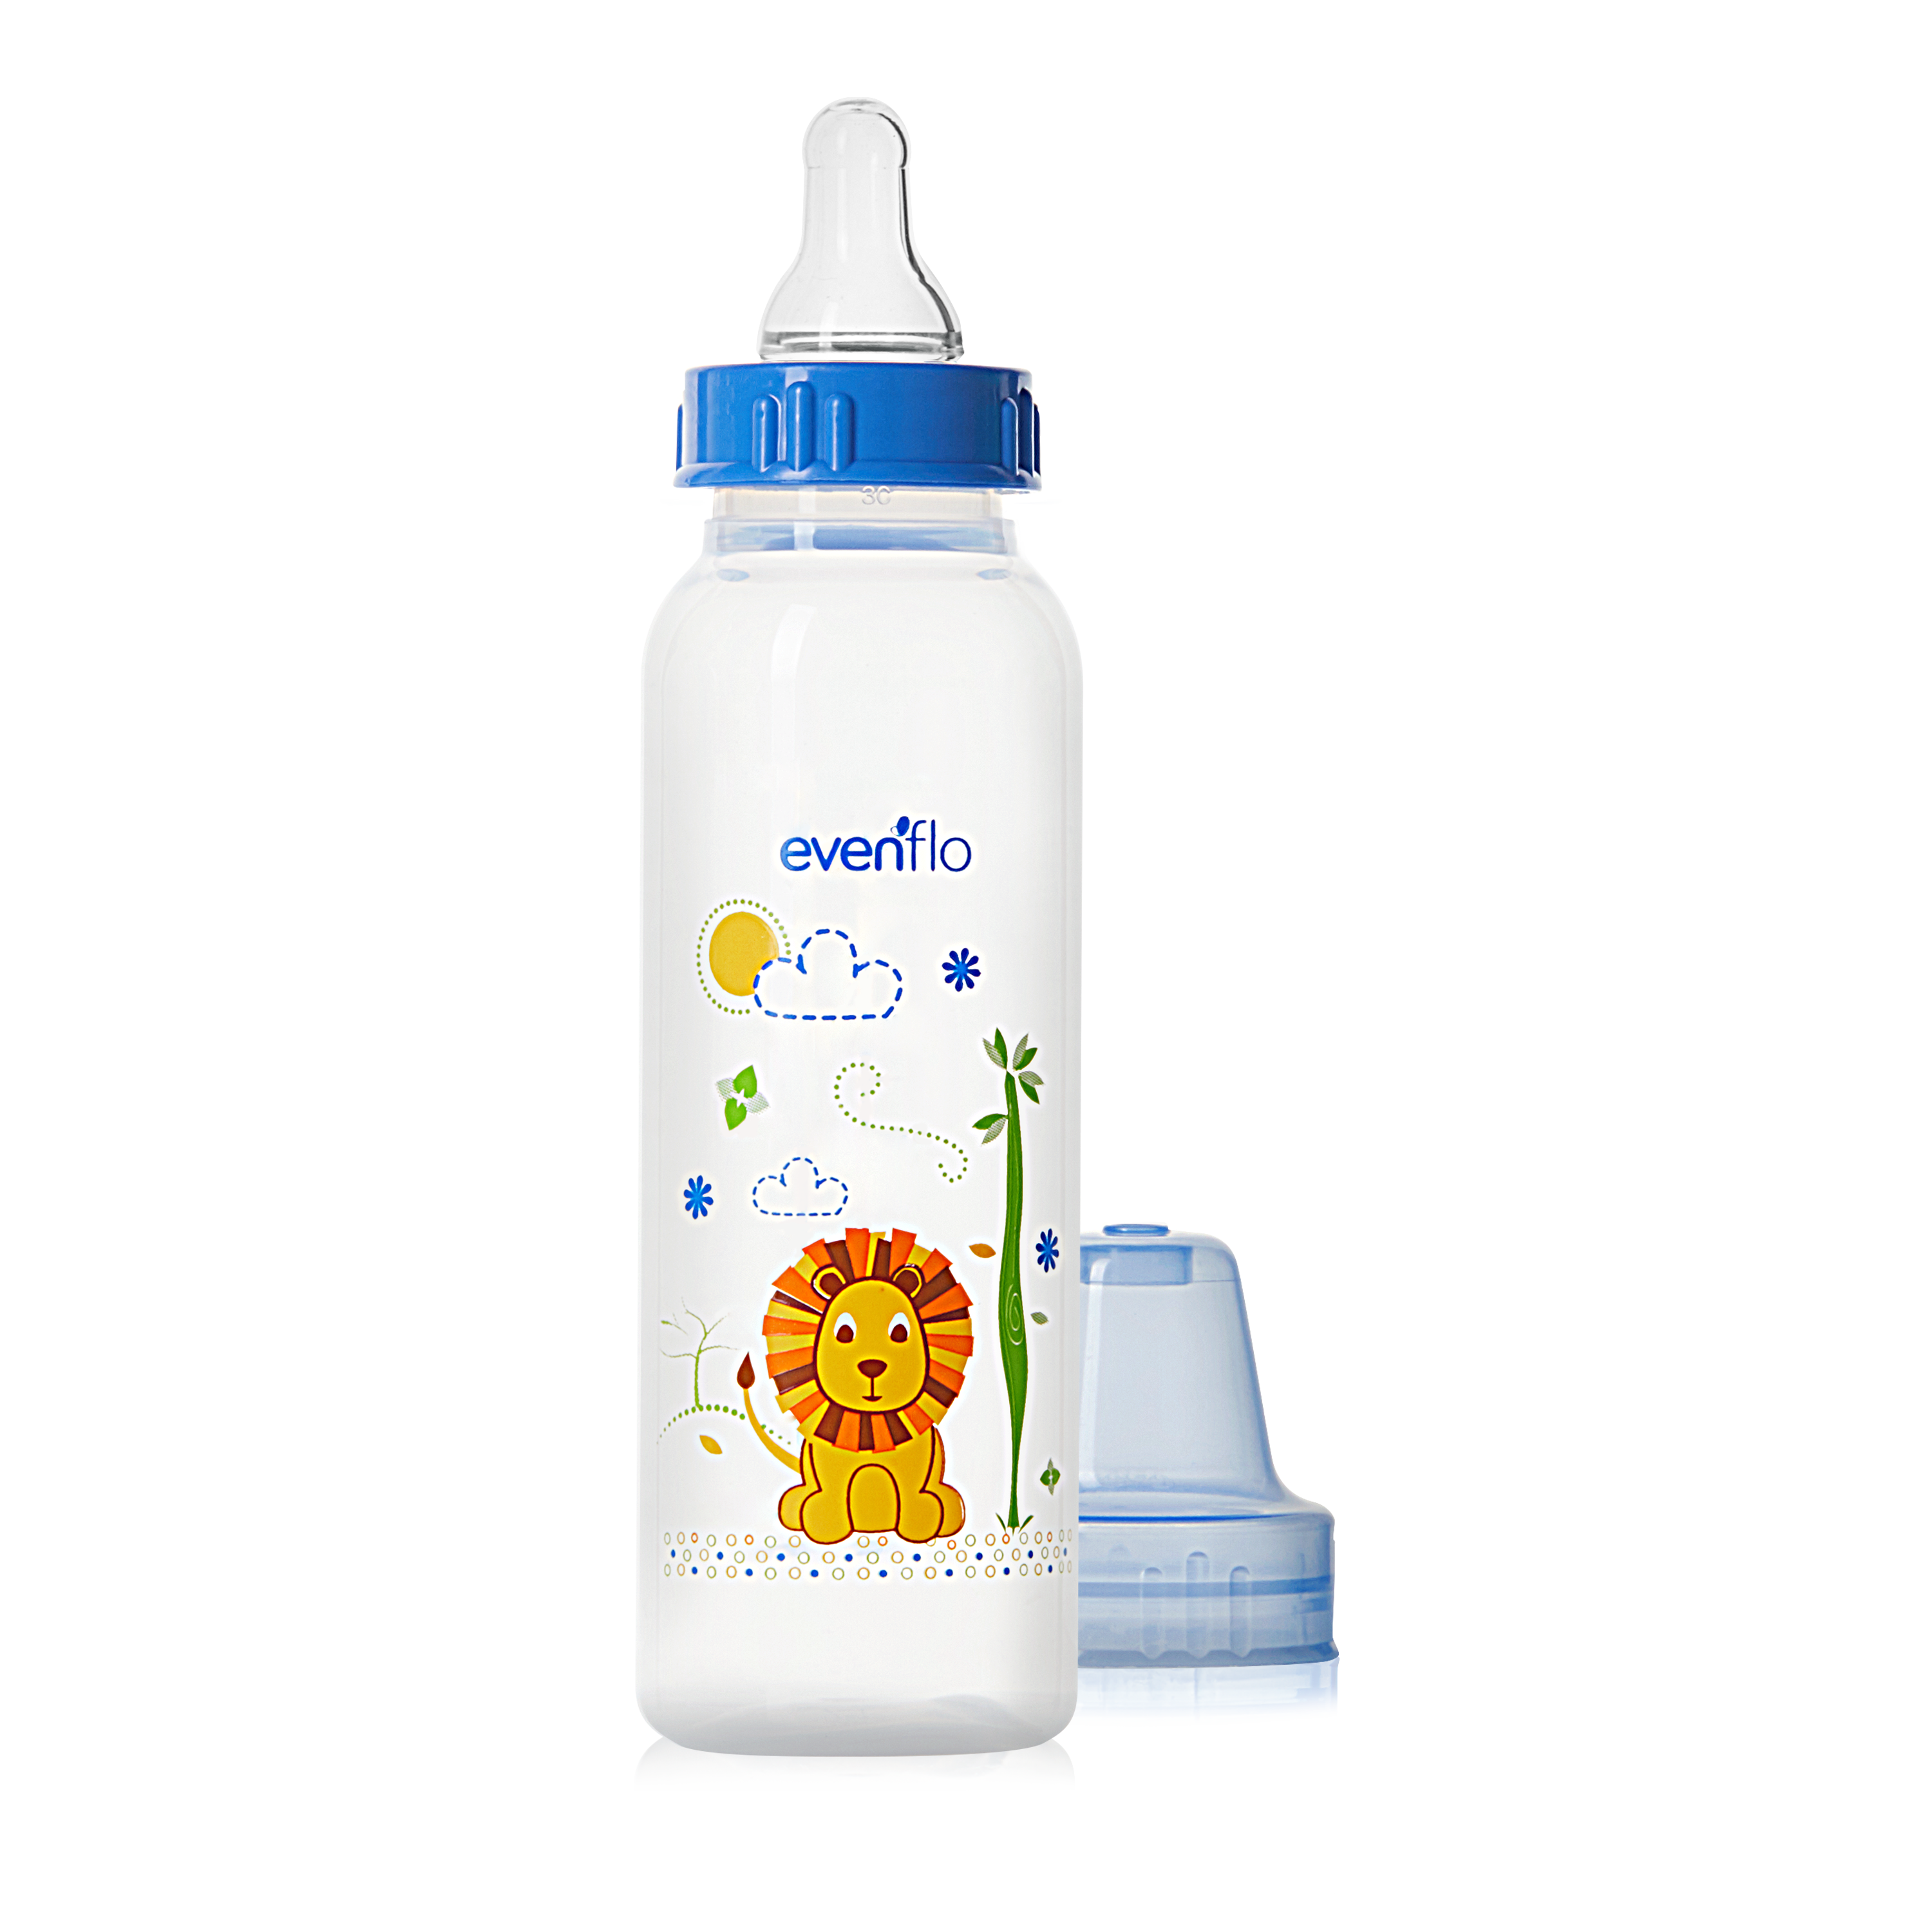 Evenflo Feeding Classic Prints Polypropylene Baby Bottle for Infant and Newborn, 8 oz (12 Pack) - image 3 of 5